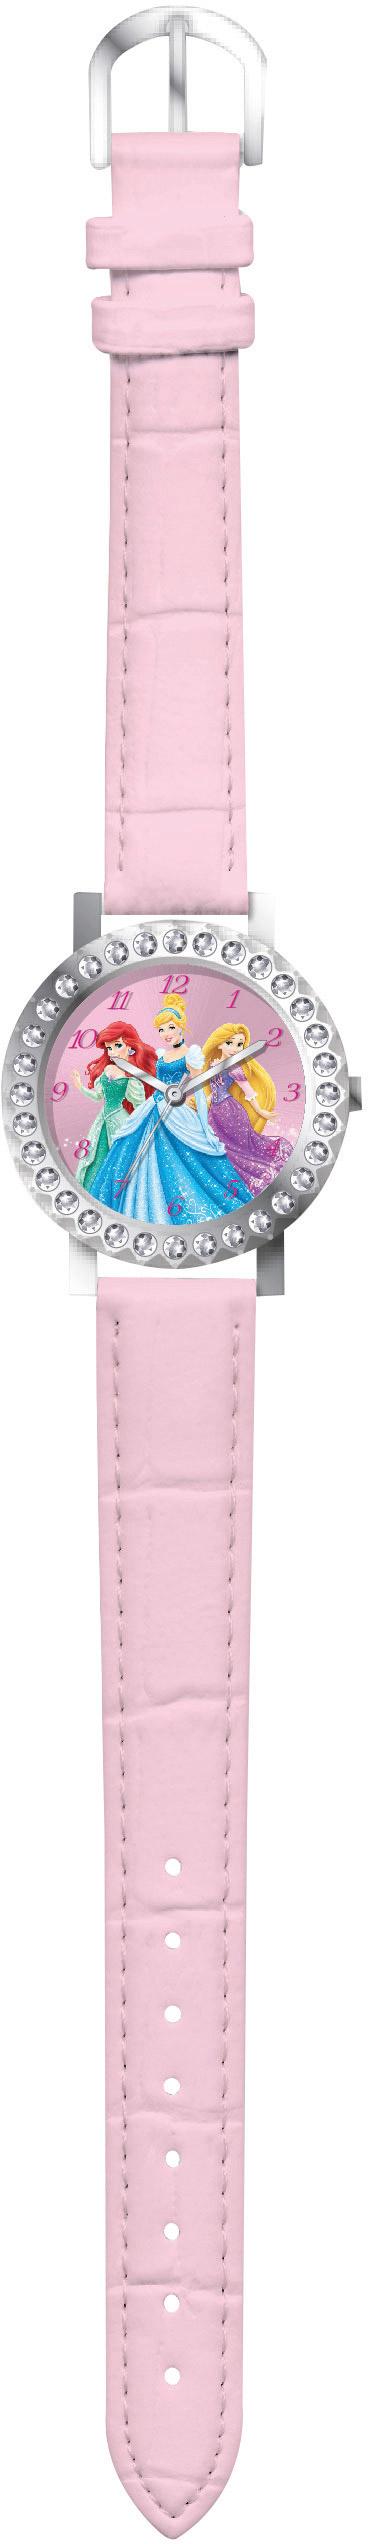 Foto Character Watches Reloj unisex Princess DP160 foto 776653